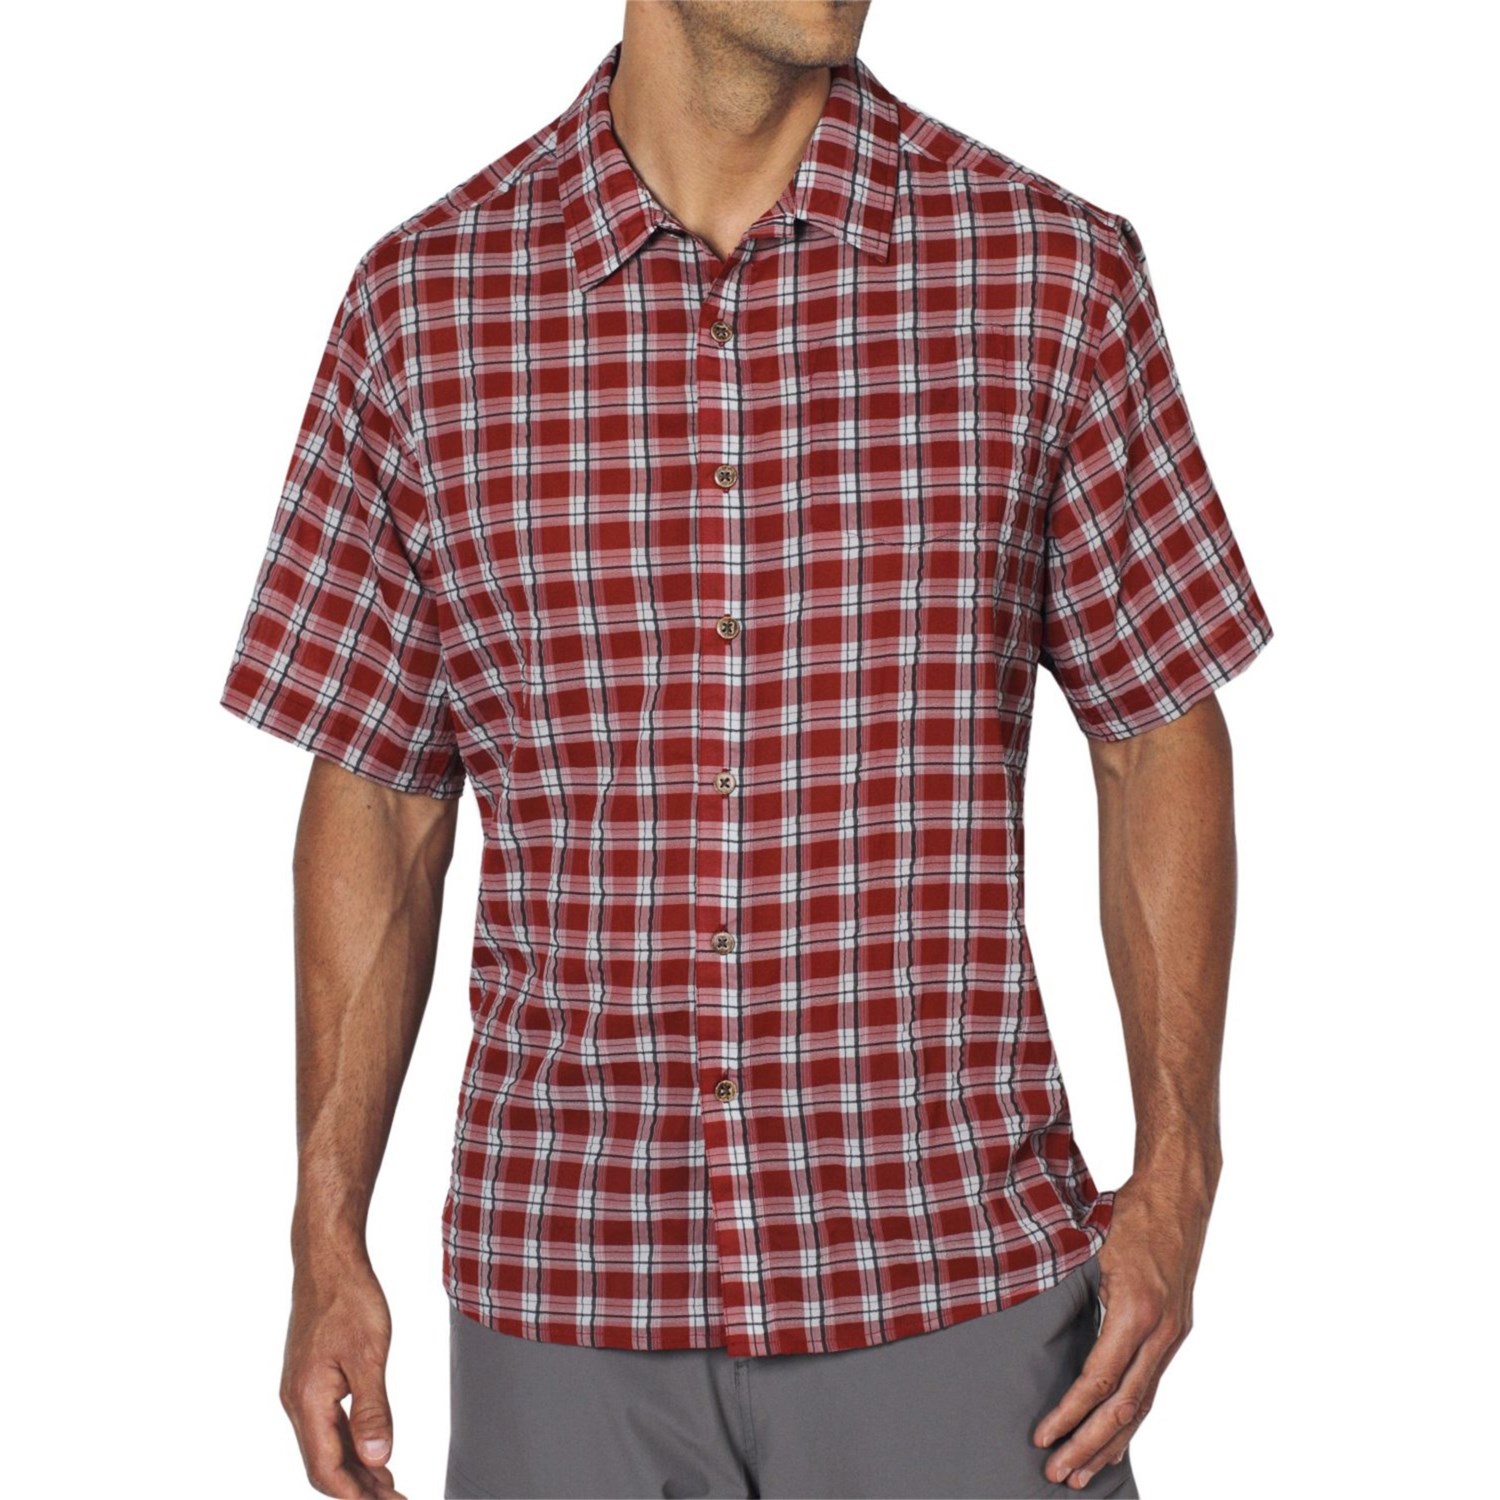 ExOfficio Next to Nothing Shirt - Plaid, Short Sleeve (For Men) - Save 32%